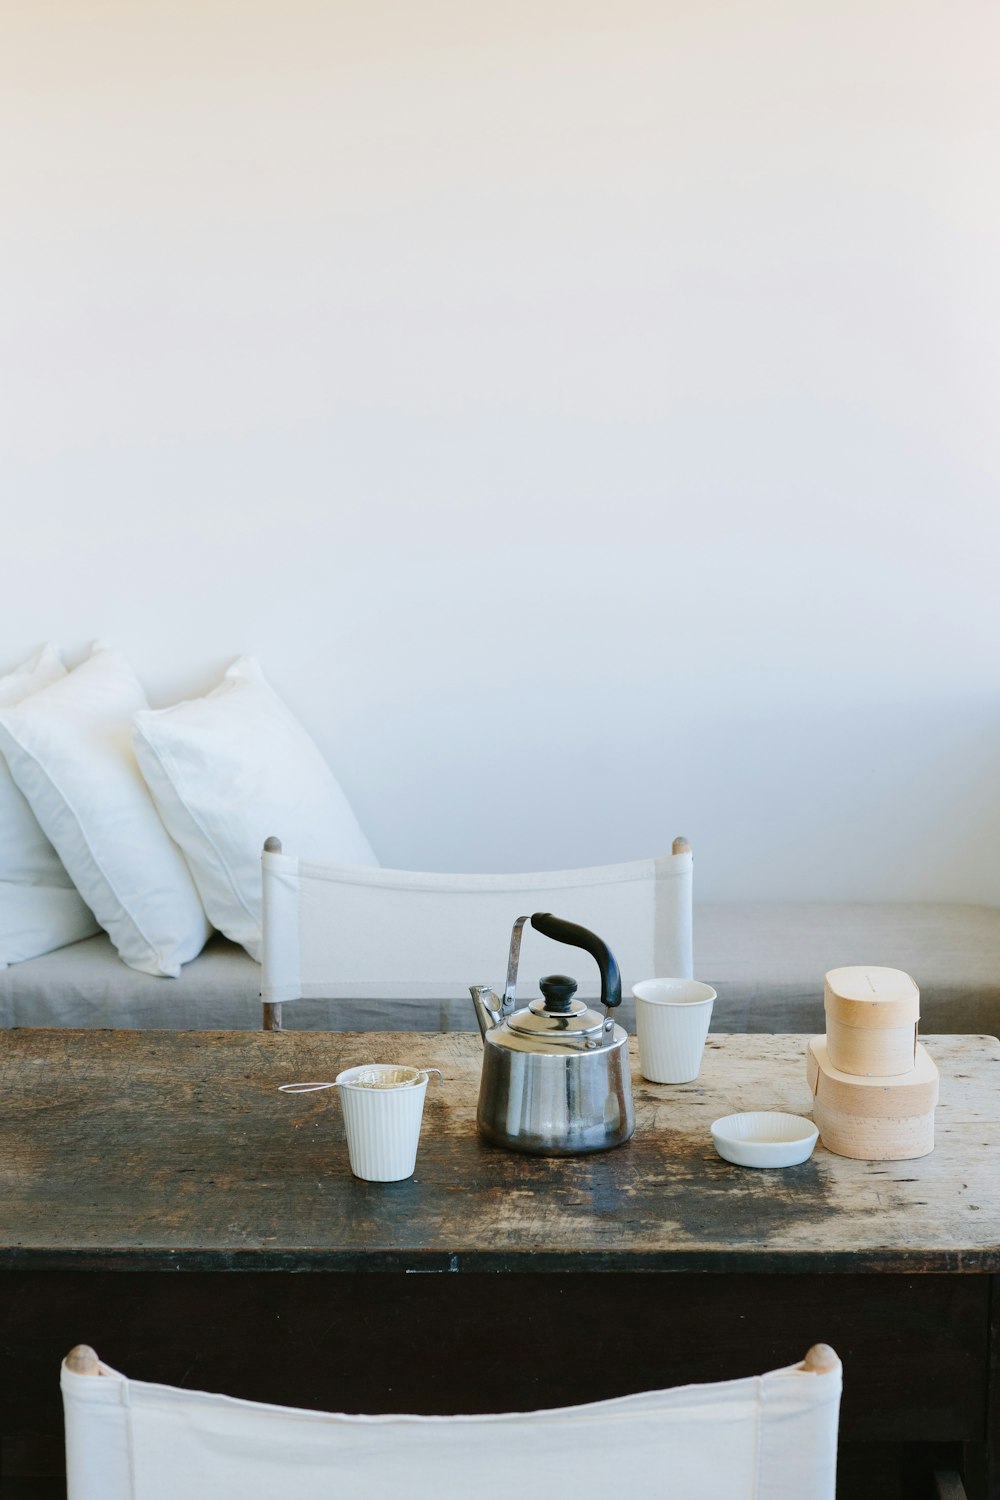 stainless steel kettle beside white ceramic mug on brown wooden table